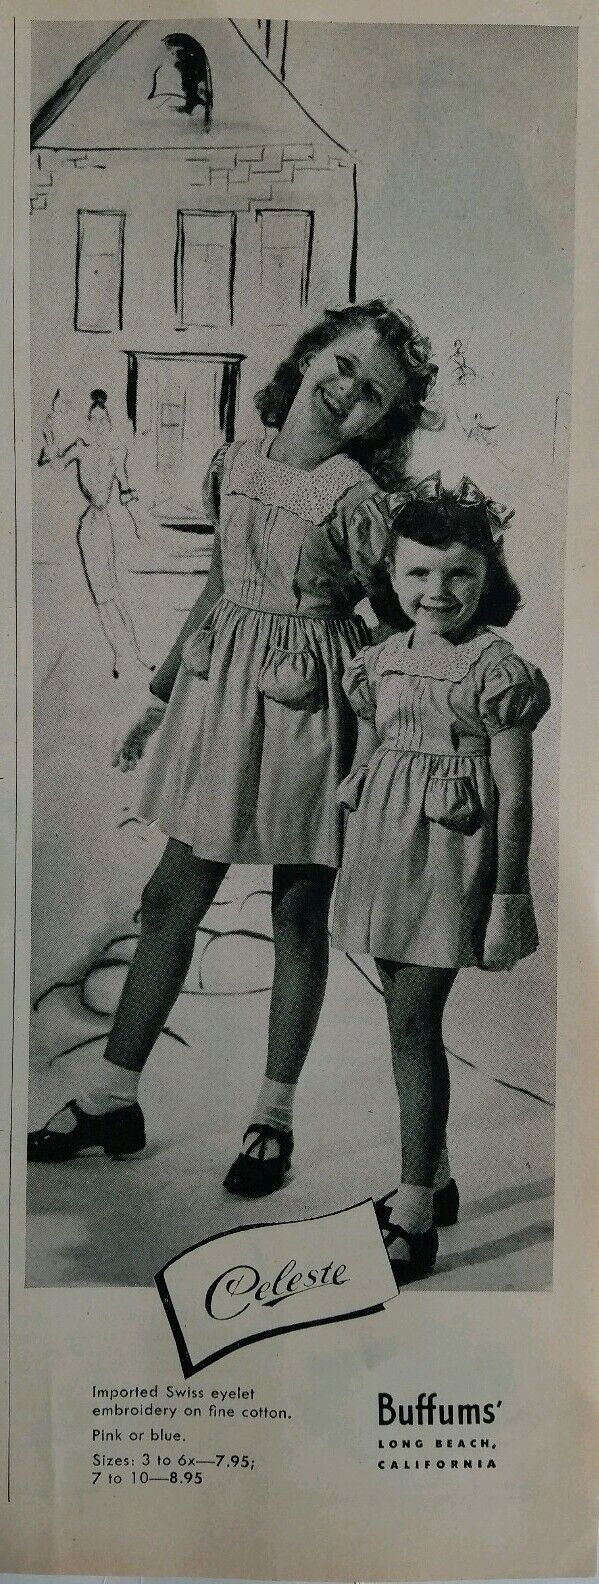 1946 little girls Celeste cotton dress imported Swiss eyelet trim vintage ad Без бренда